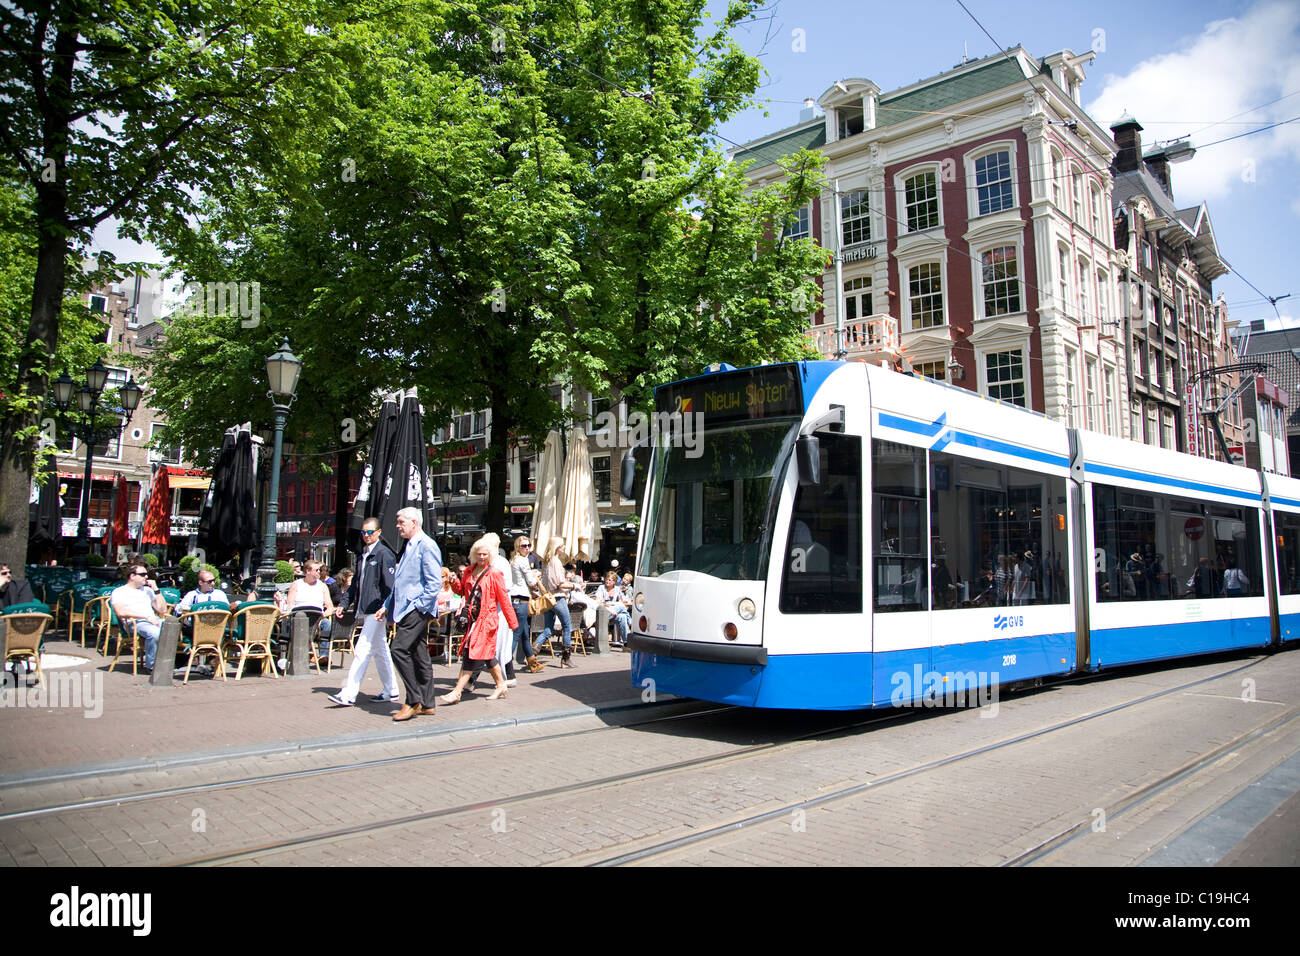 En tram Leidesplein, Amsterdam, Pays-Bas. Banque D'Images